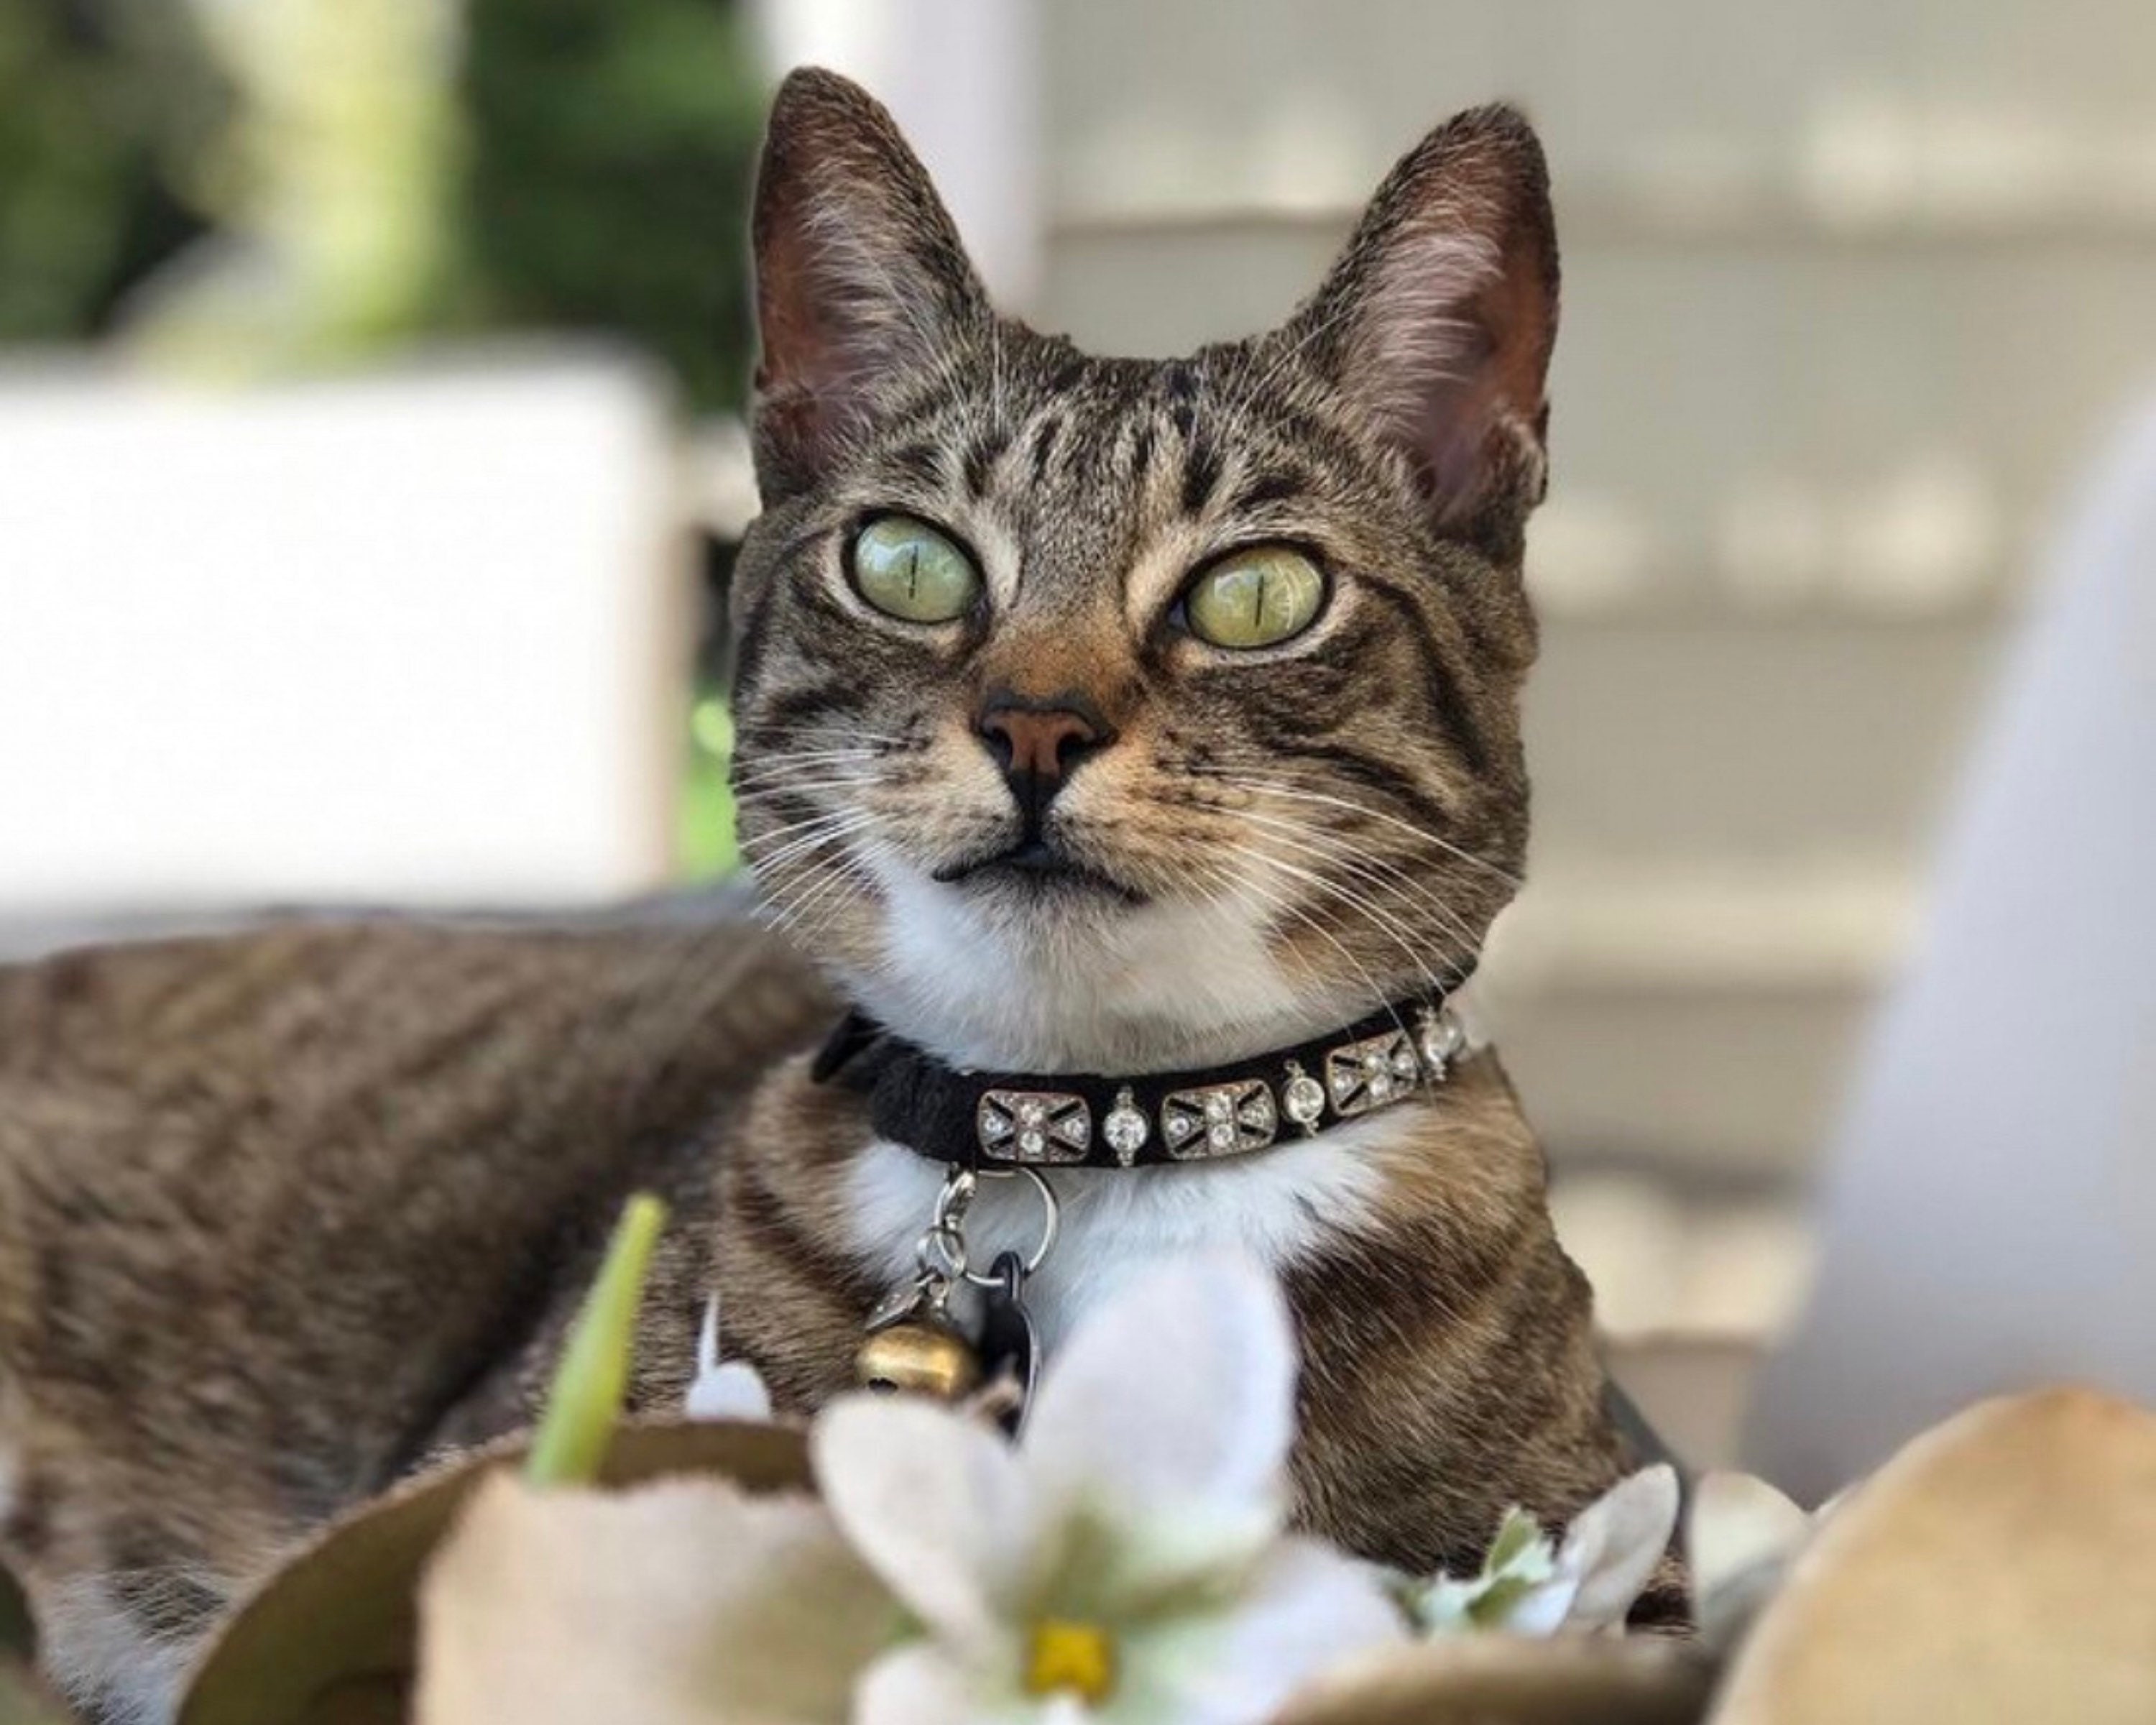 Bling Pet Dog Collar Fashion Bone Pendant Crystal Diamond Cat Collars –  Triple AAA Fashion Collection